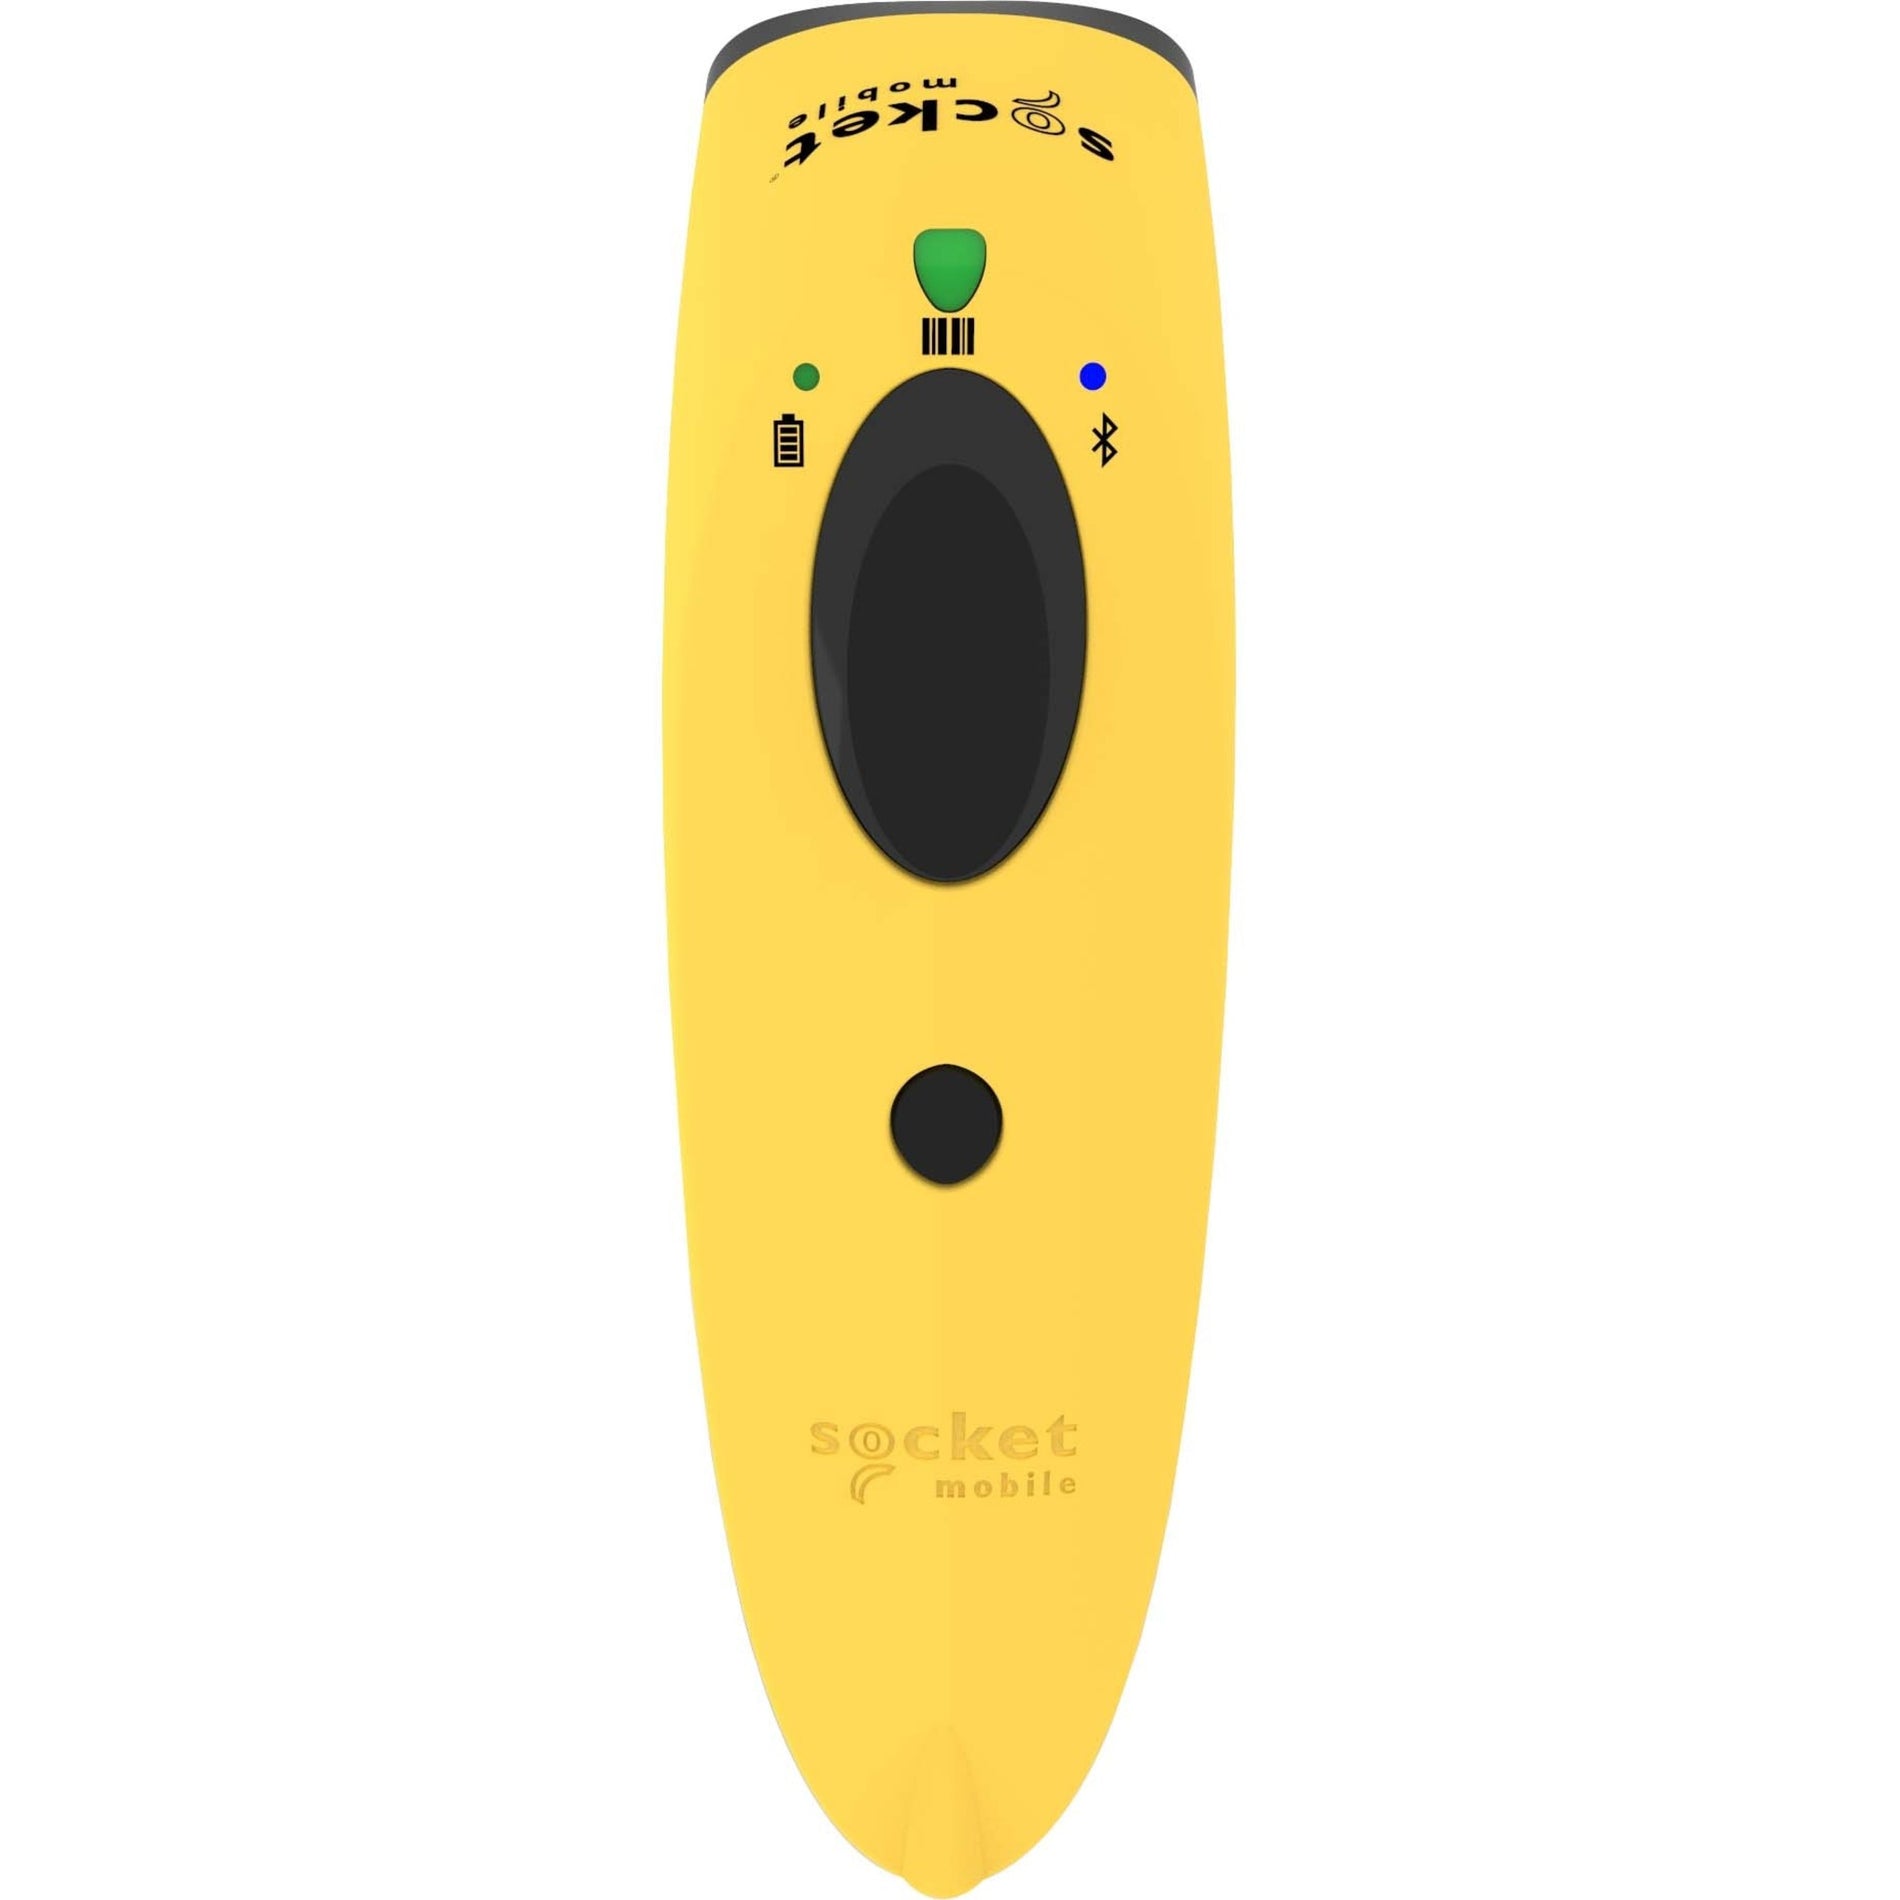 Socket Mobile CX3393-1851 SocketScan S700 1D Imager Barcode Scanner Yellow, Wireless Bluetooth